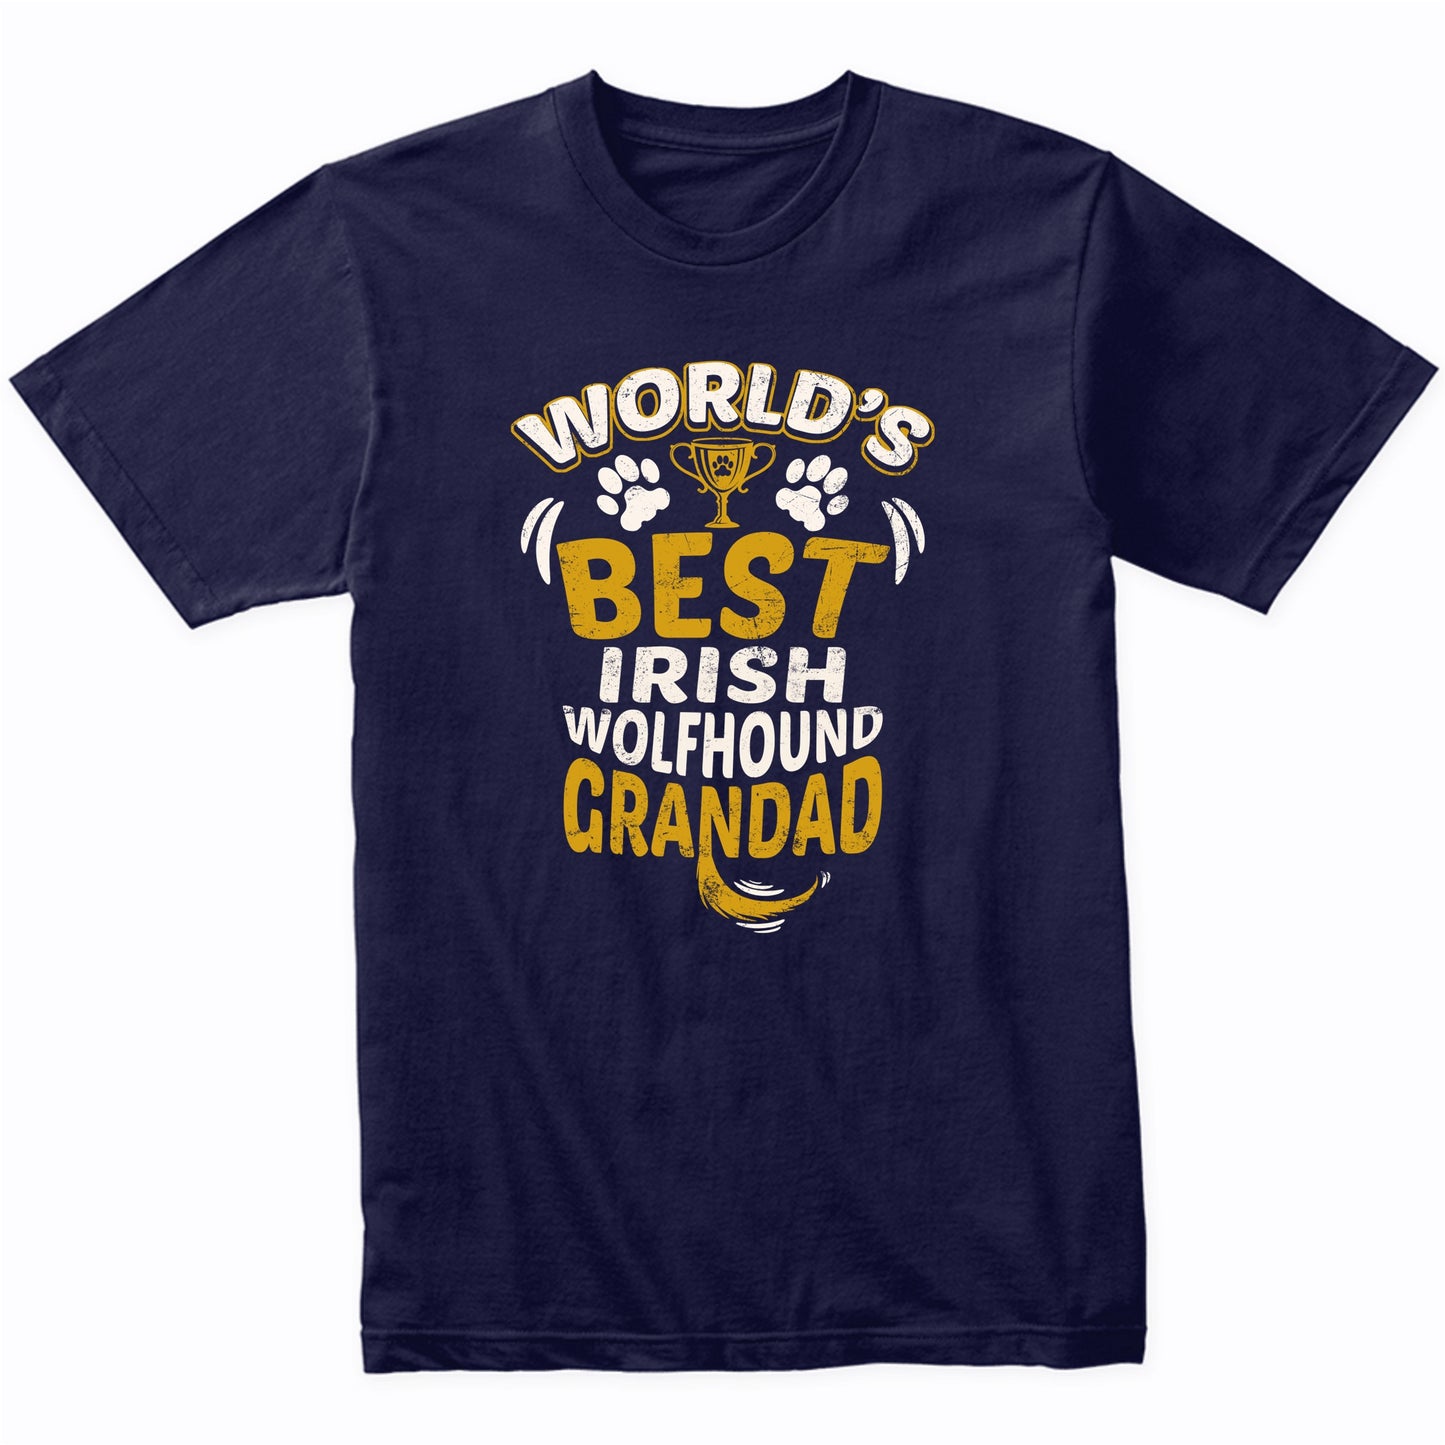 World's Best Irish Wolfhound Grandad Graphic T-Shirt